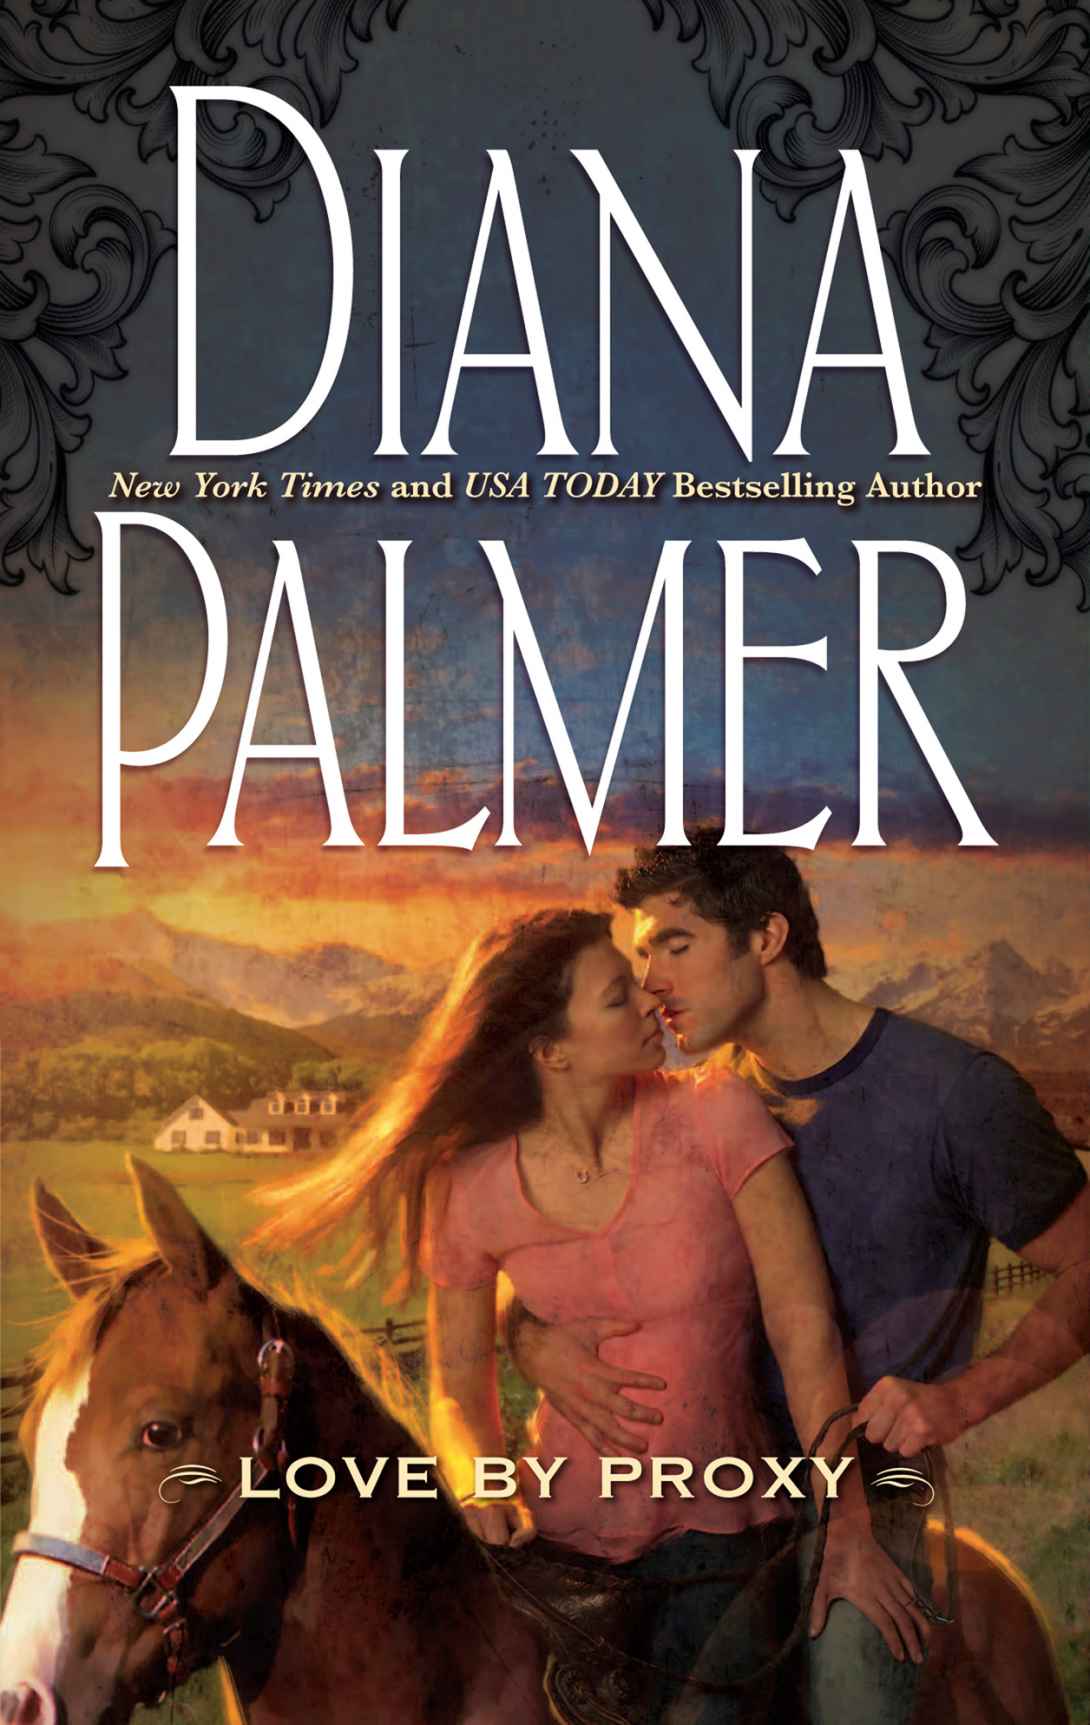 Love by Proxy by Diana Palmer